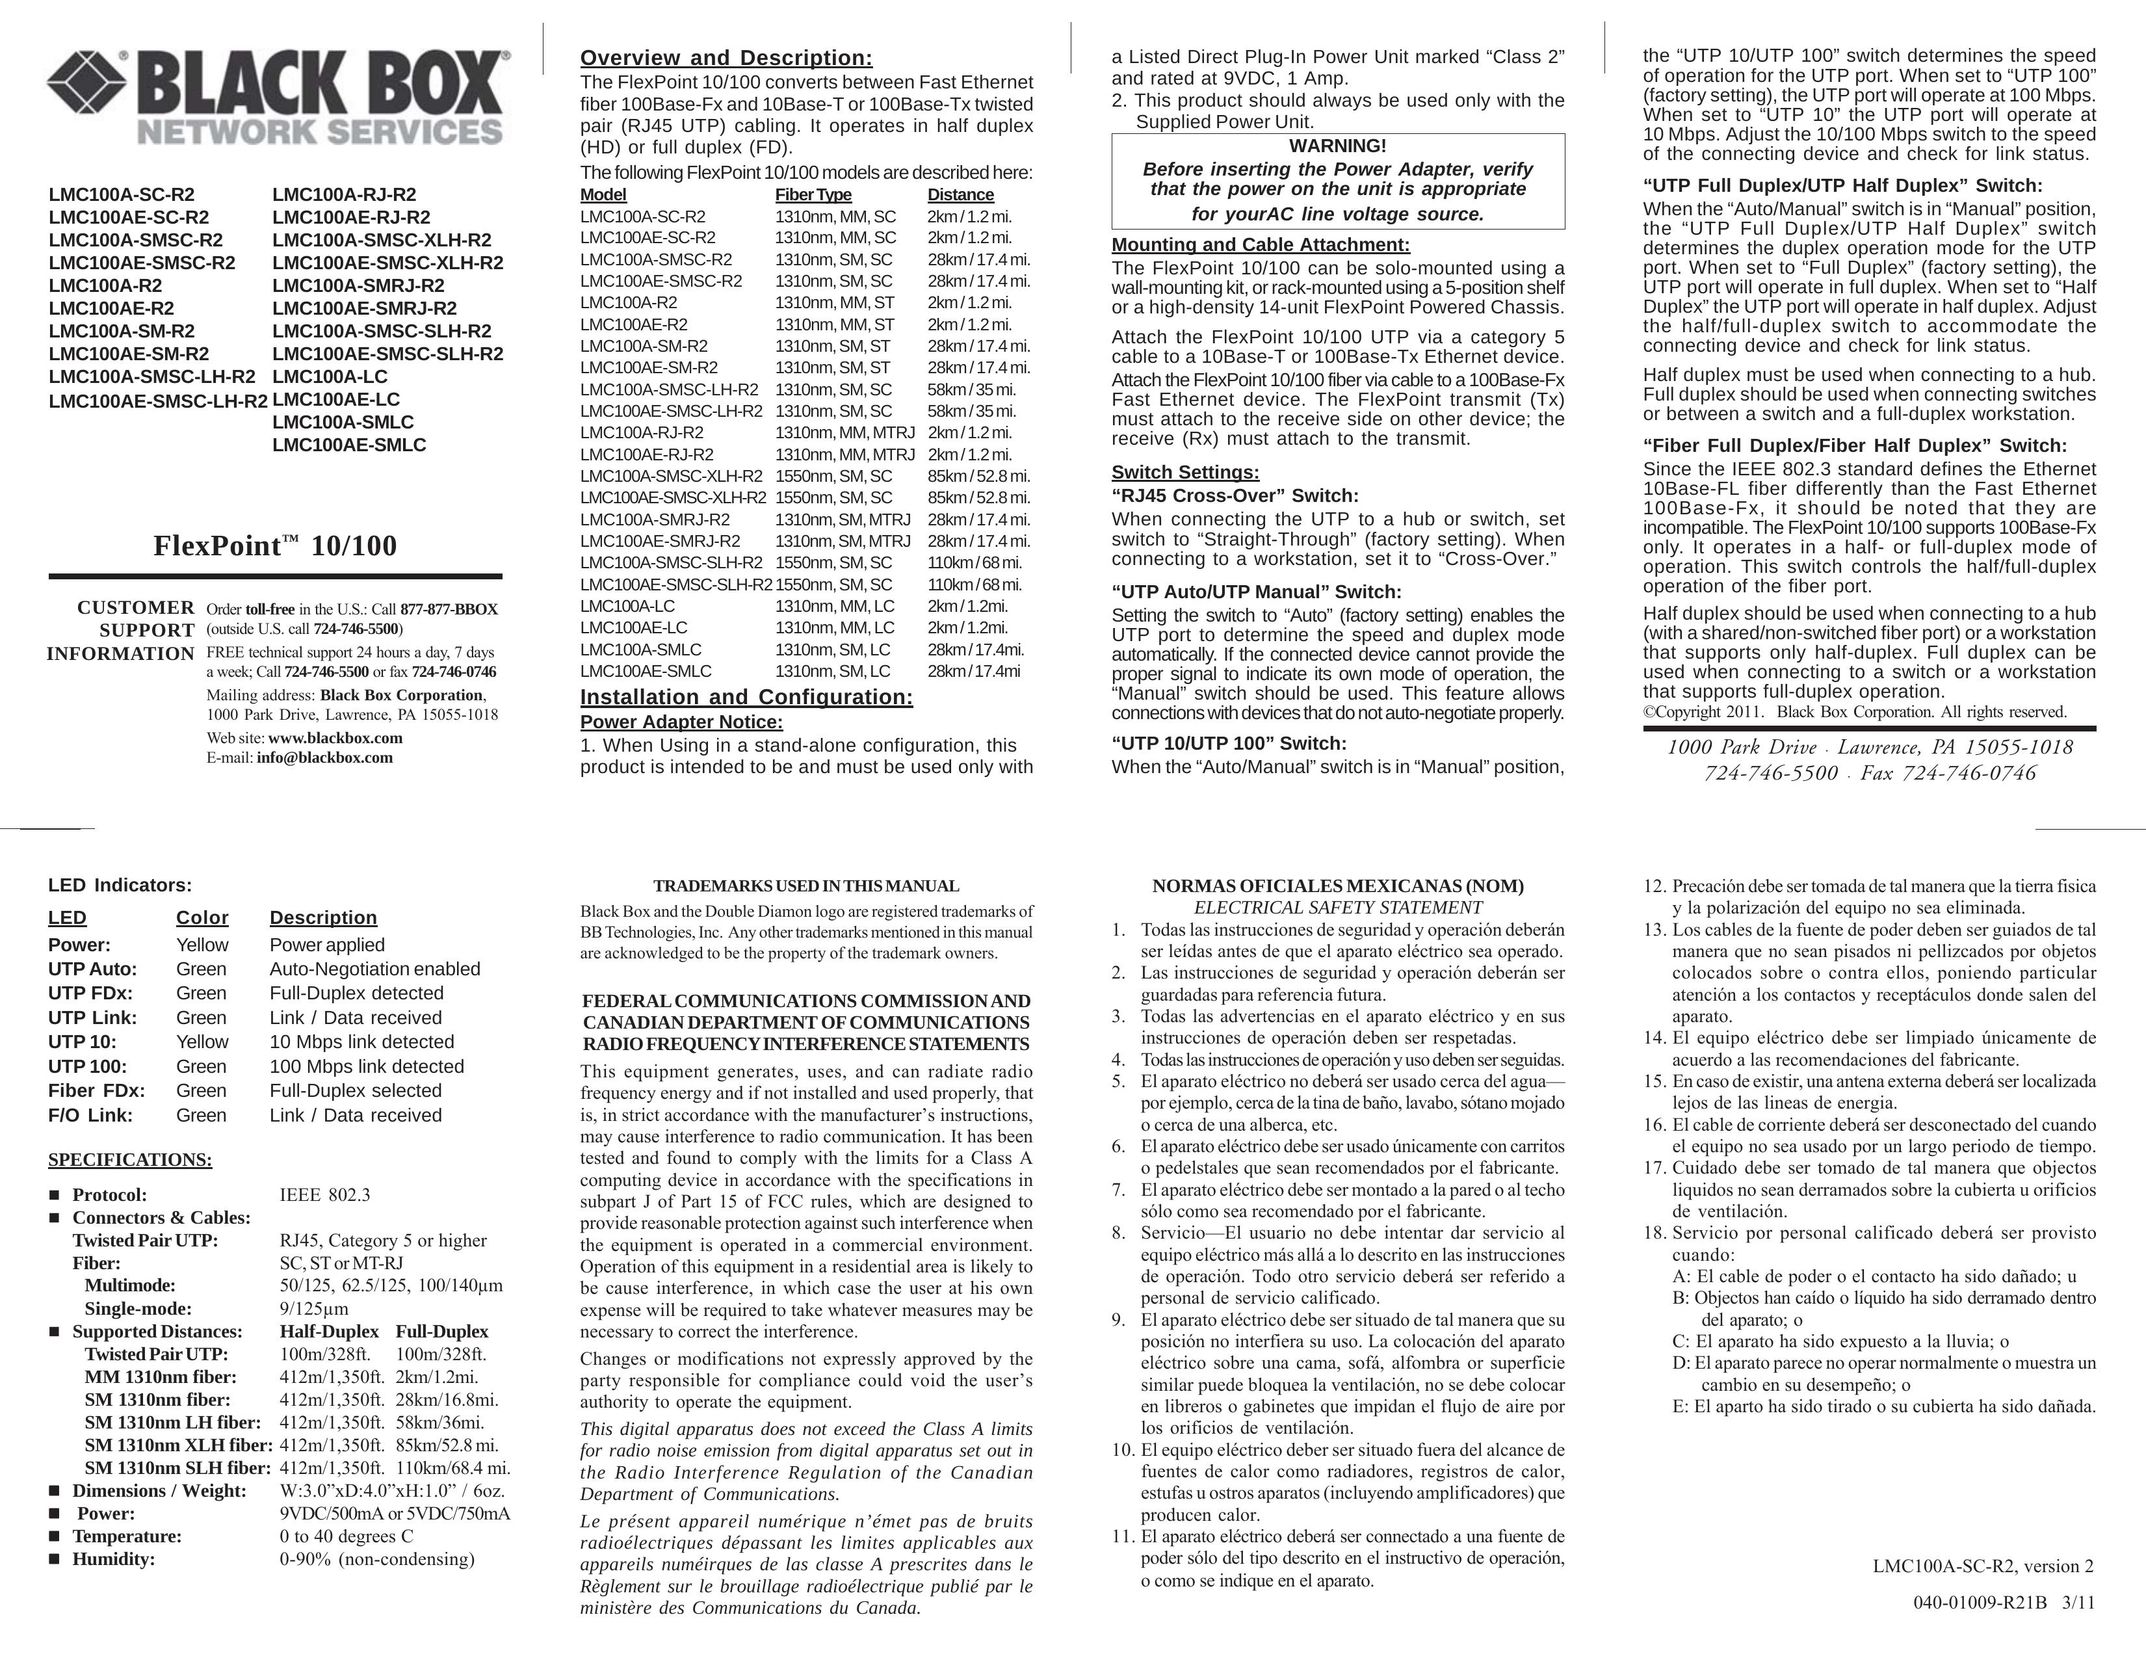 Black Box LMC100A-LC Network Cables User Manual